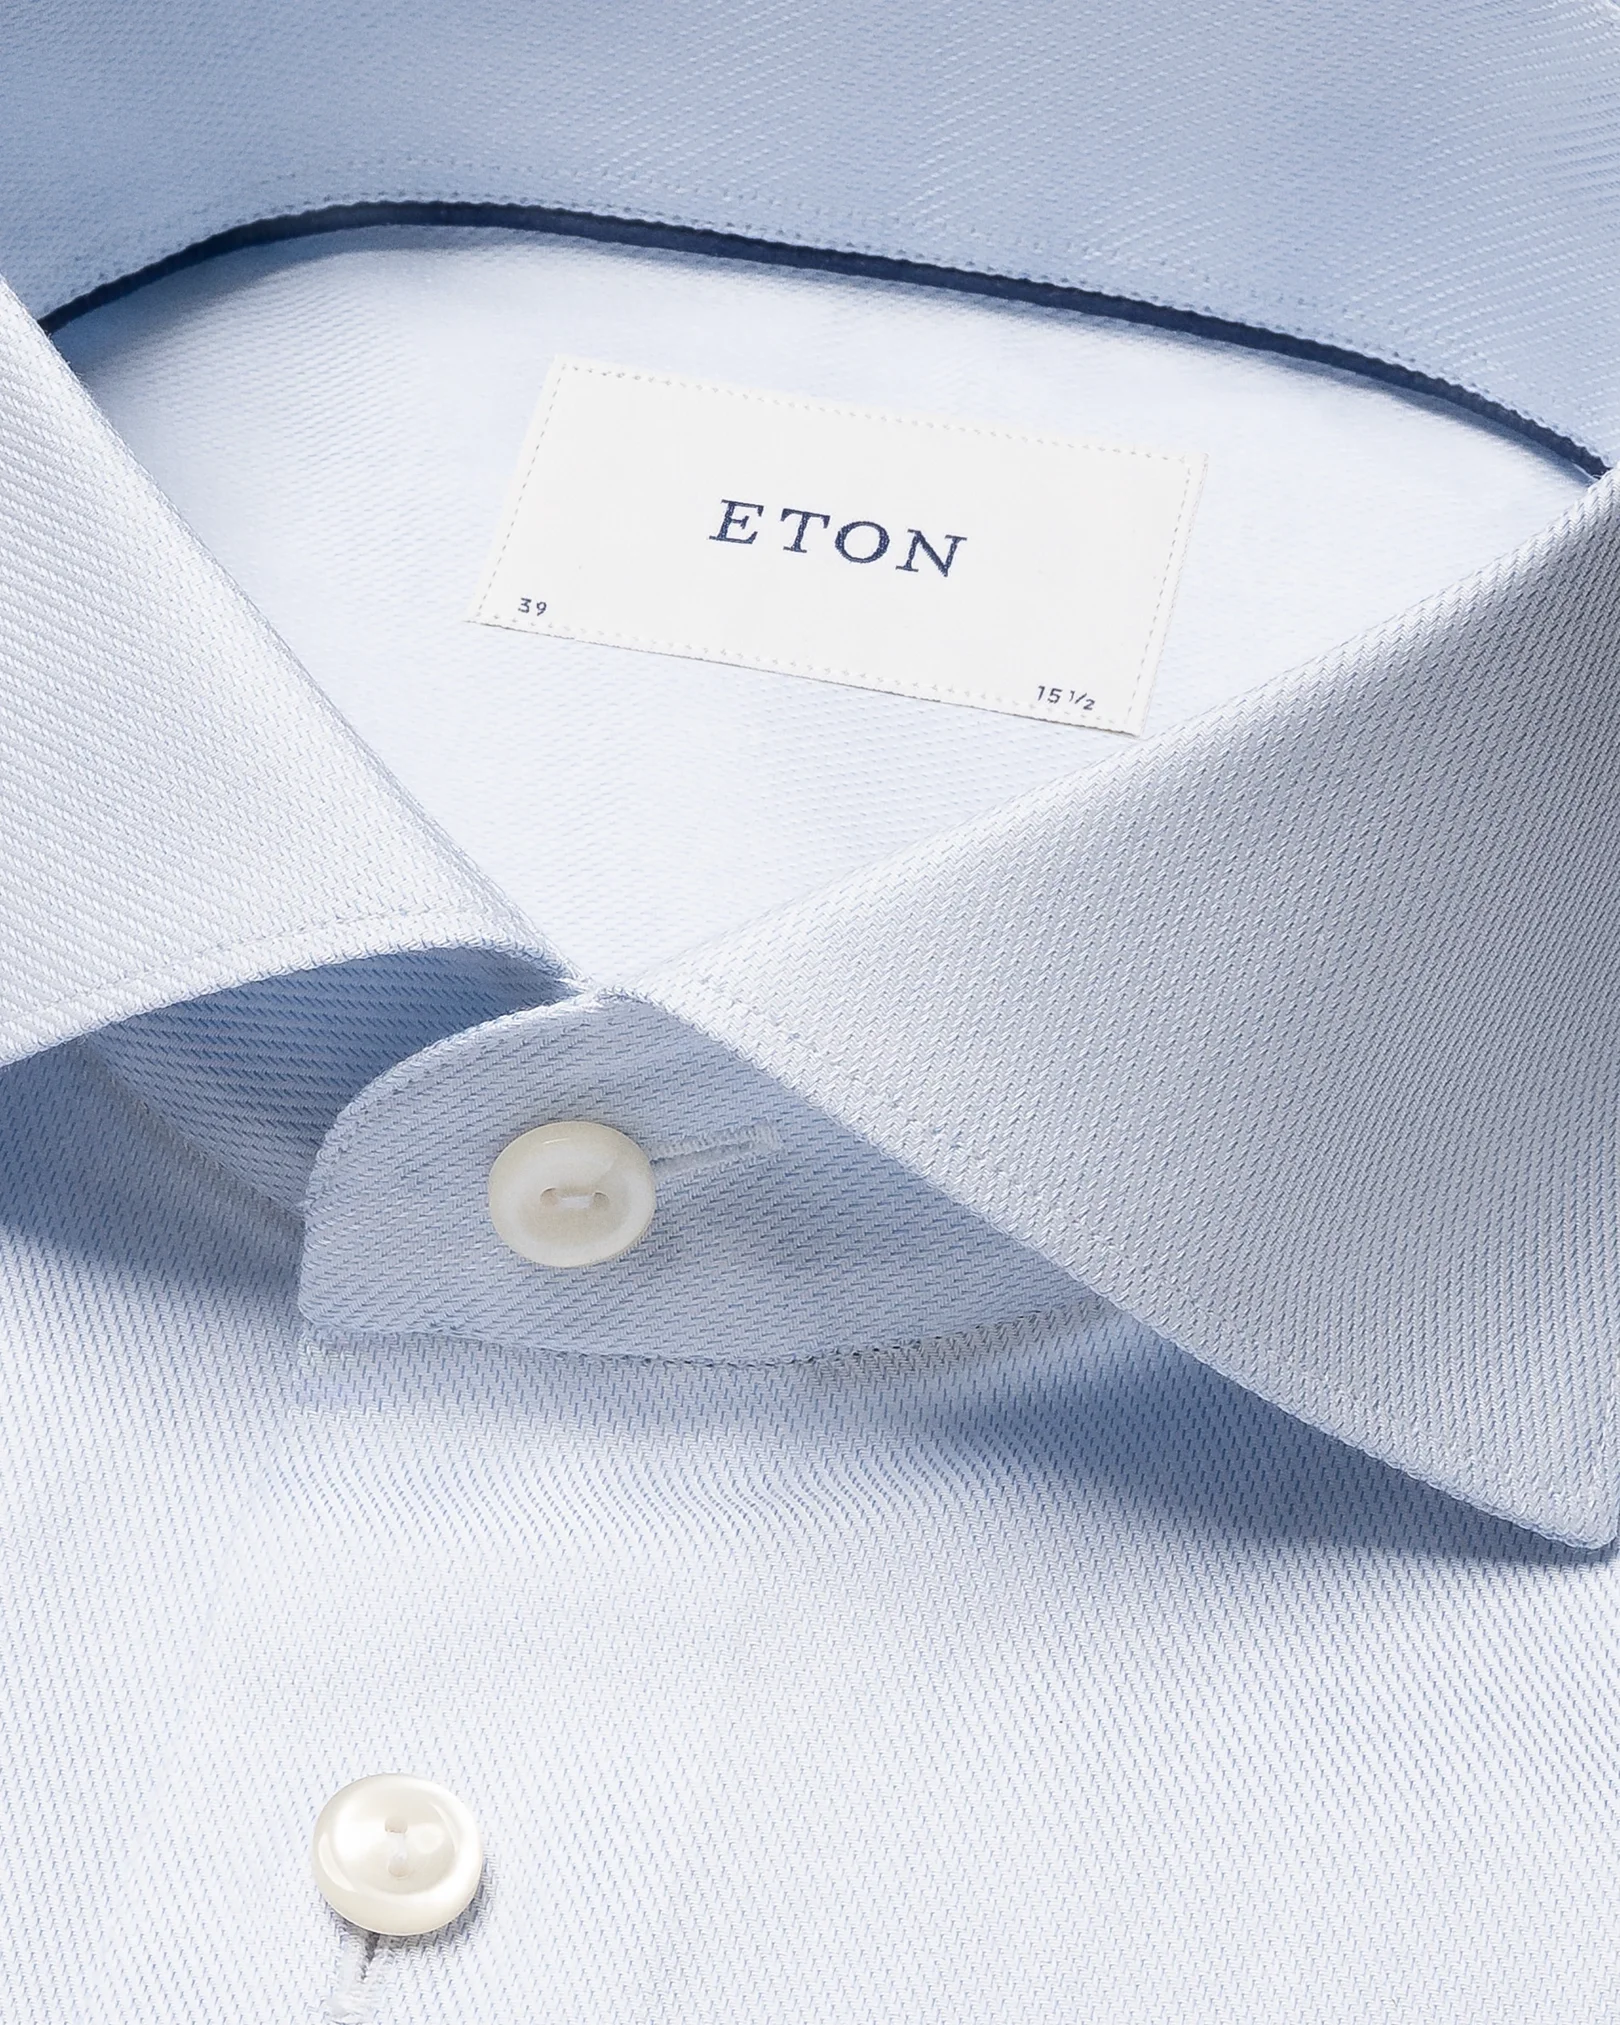 Eton - light blue twill wide spread collar